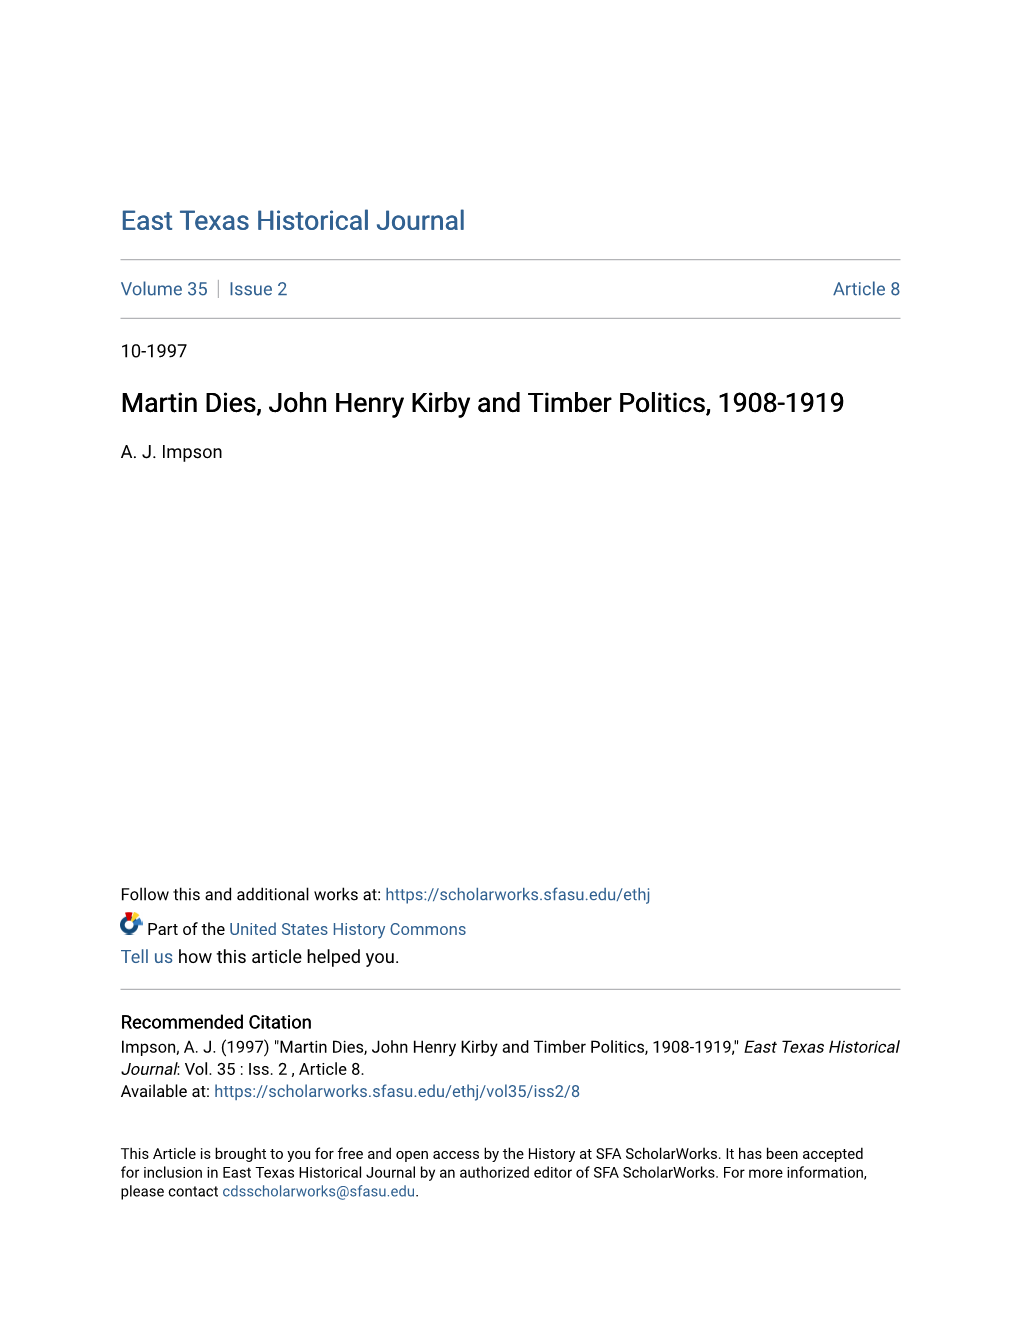 Martin Dies, John Henry Kirby and Timber Politics, 1908-1919